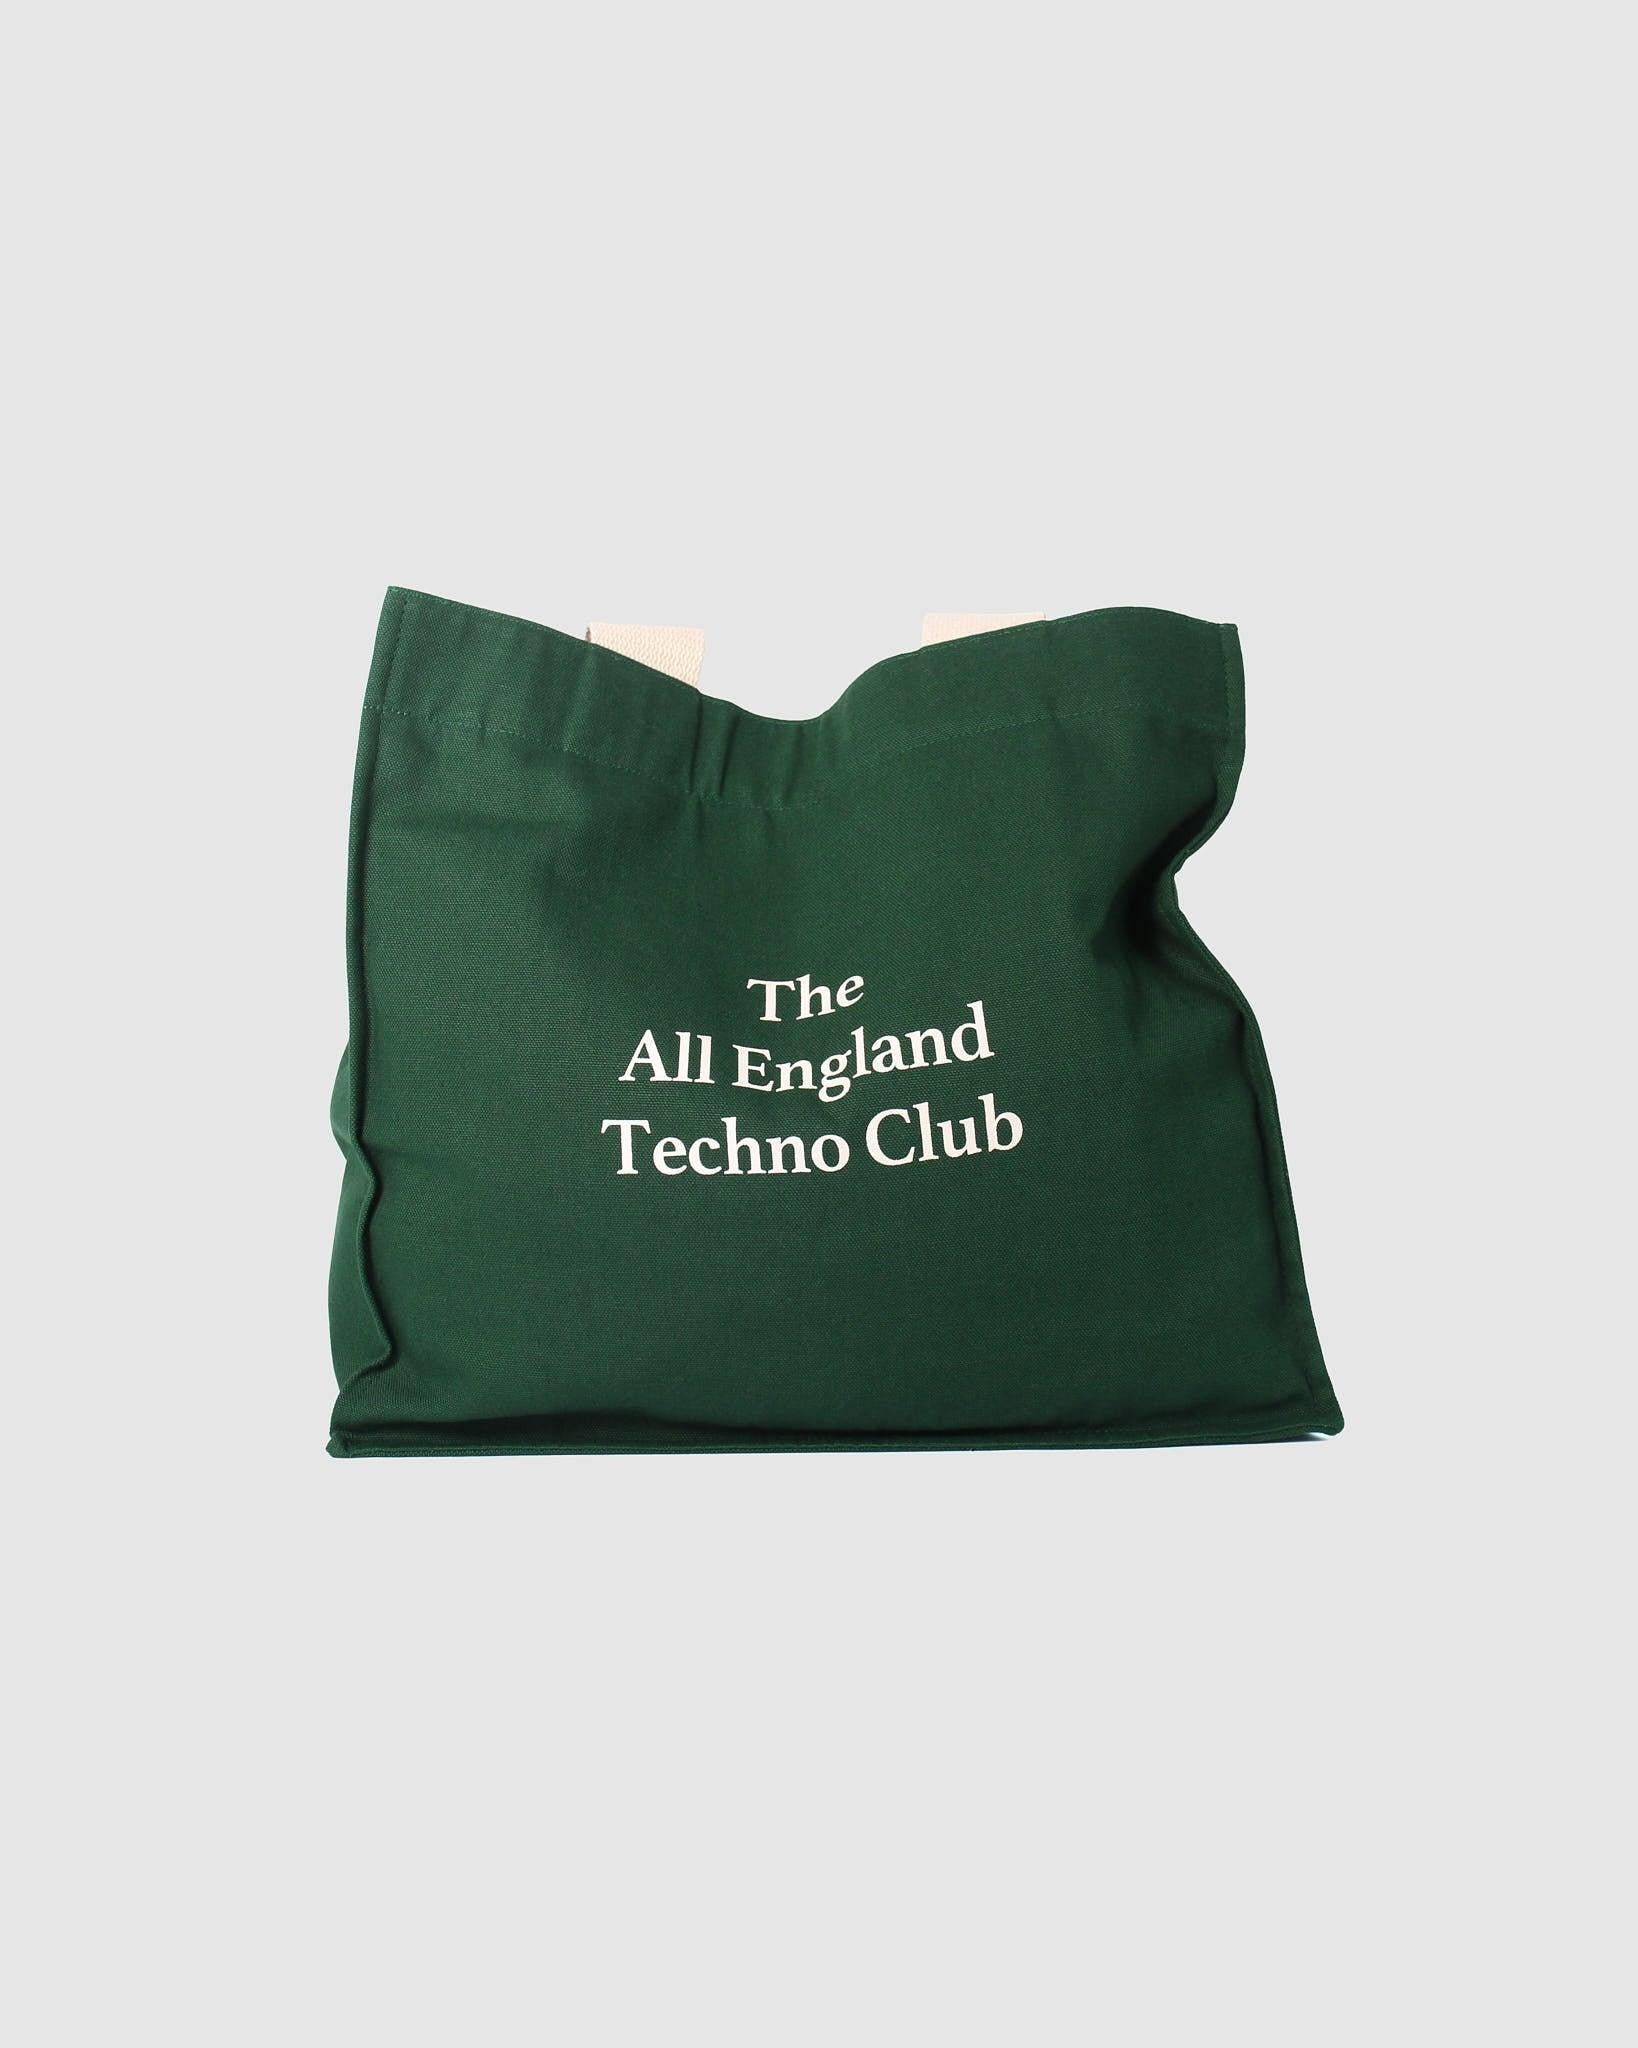 The All England Techno Club Bag - The All England Techno Club Bag - Chinatown Country Club 